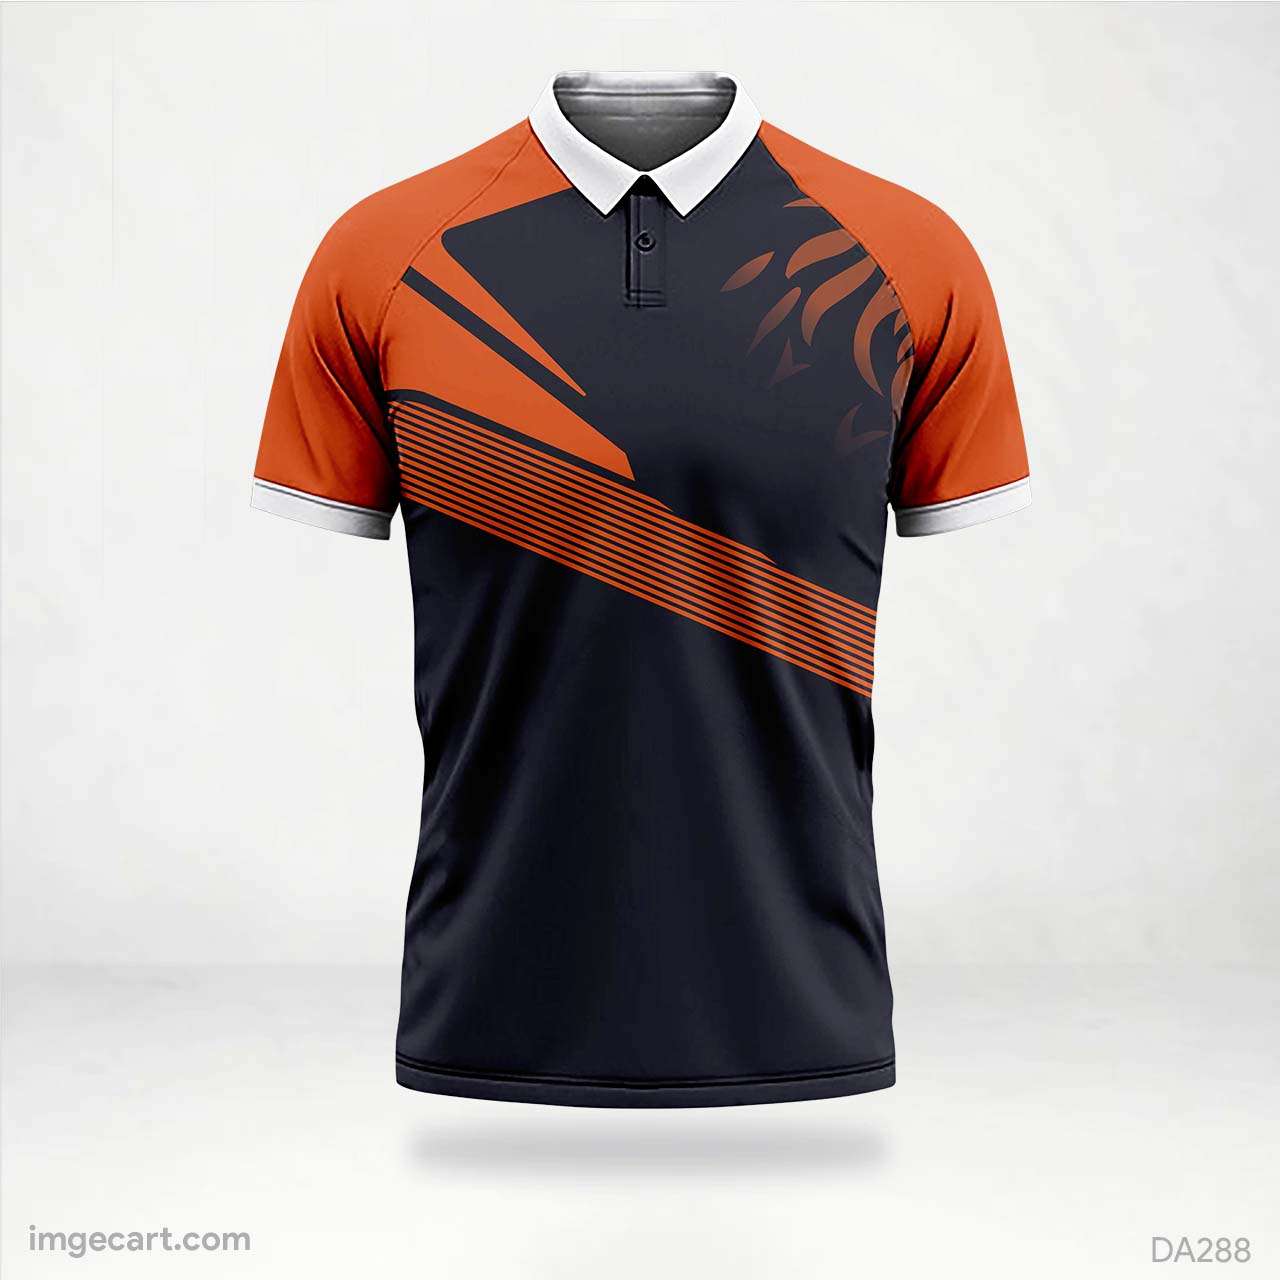 Cricket jersey black with orange Pattern - imgecart